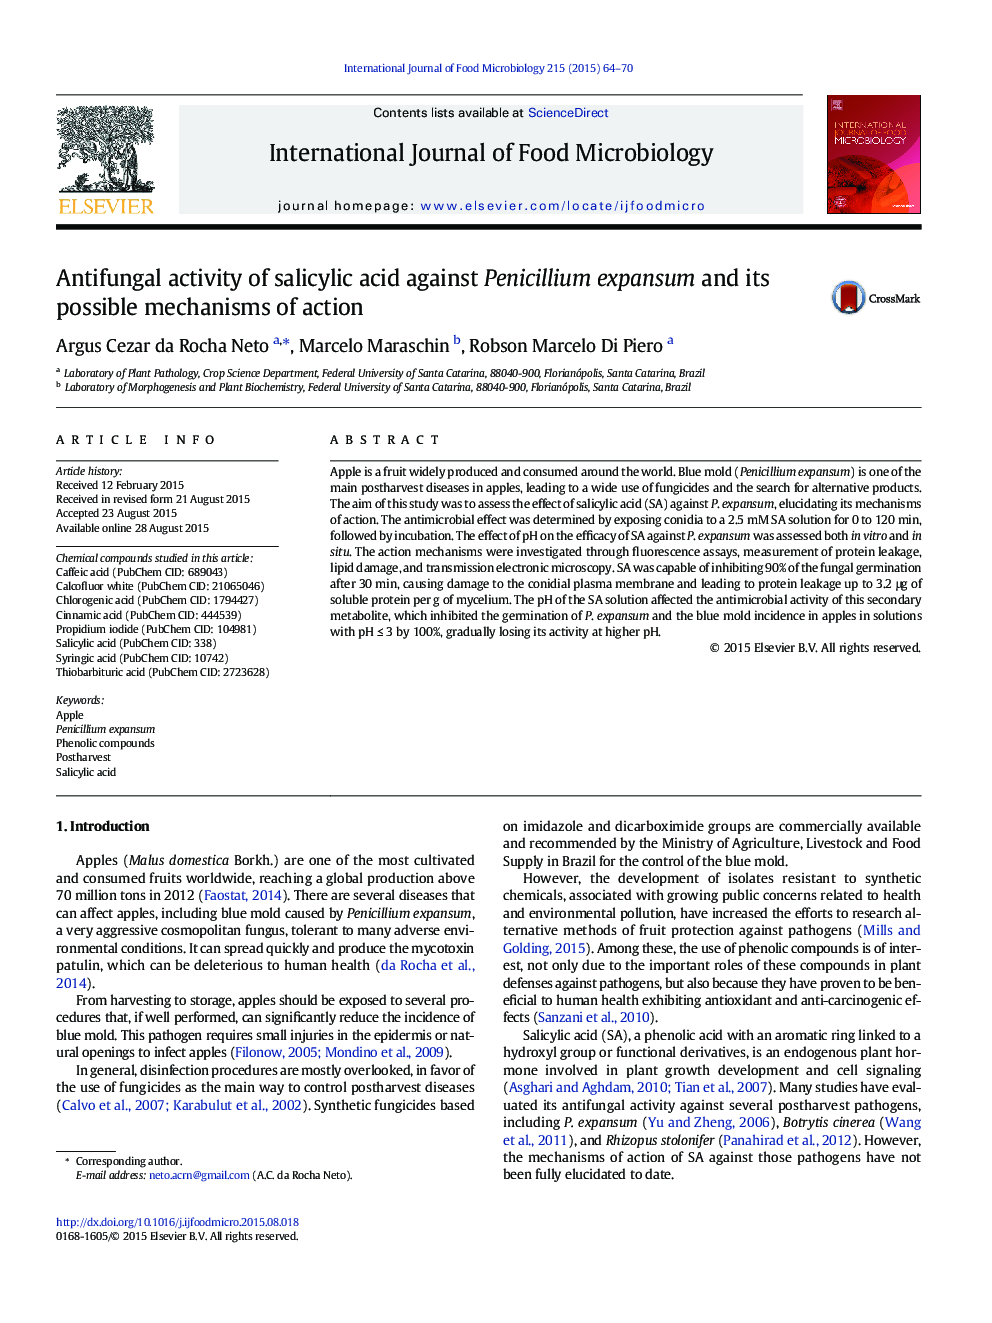 Antifungal activity of salicylic acid against Penicillium expansum and its possible mechanisms of action